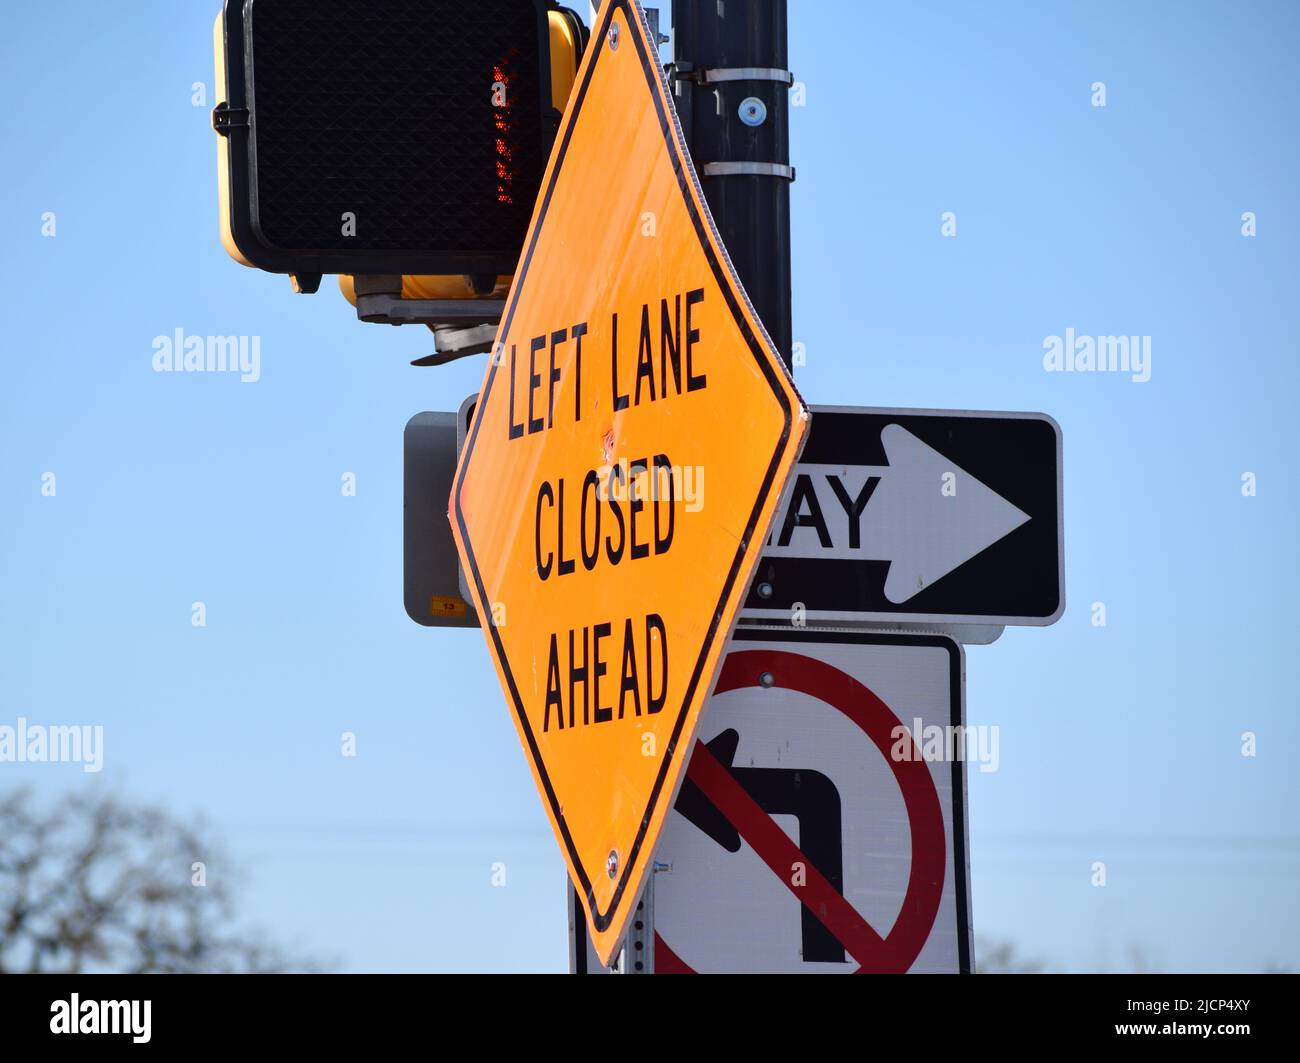 Left Lane Closed Ahead construction sign Stock Photo